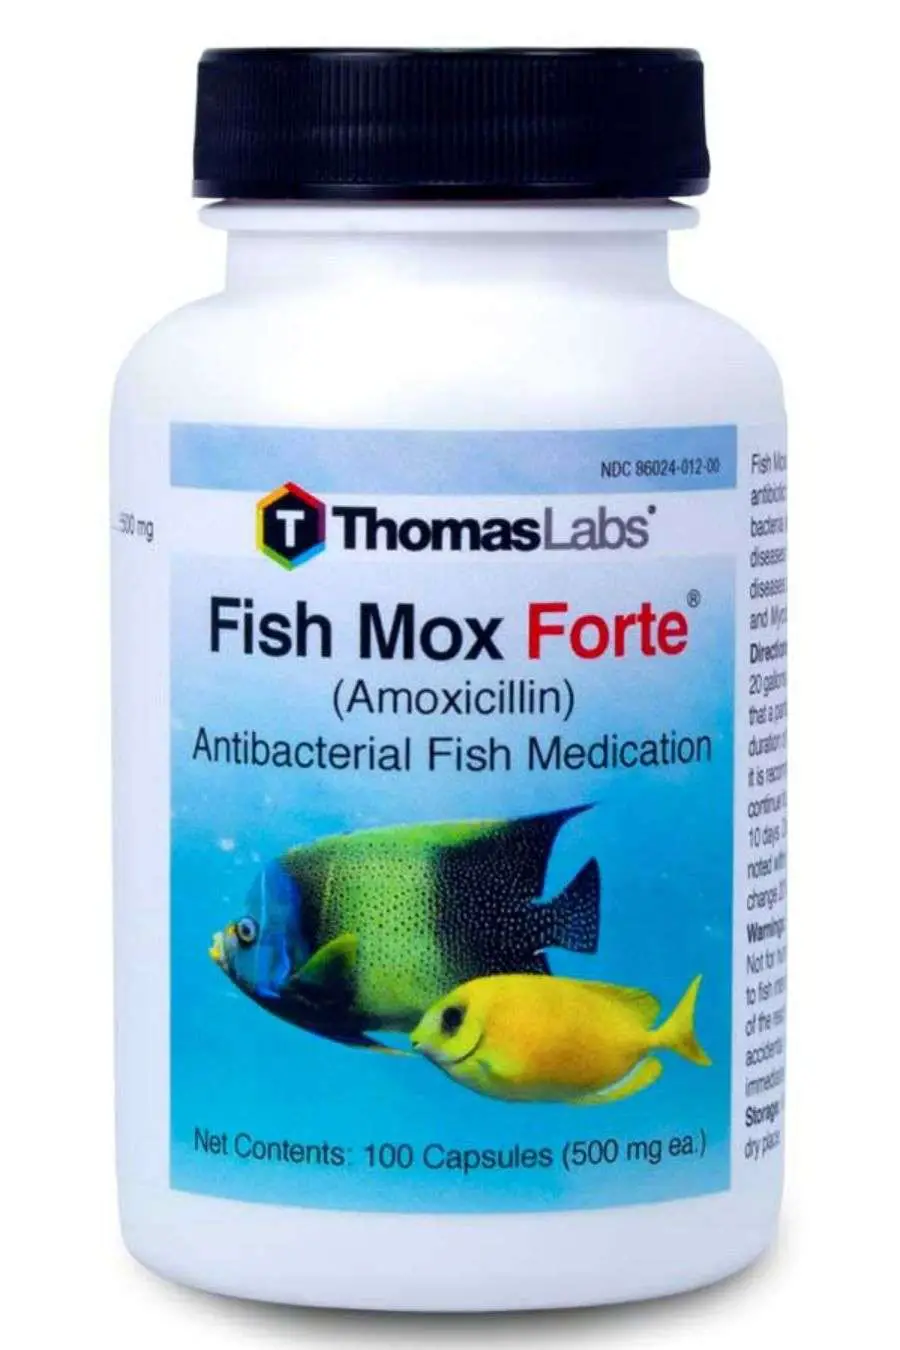 Fish Mox Forte